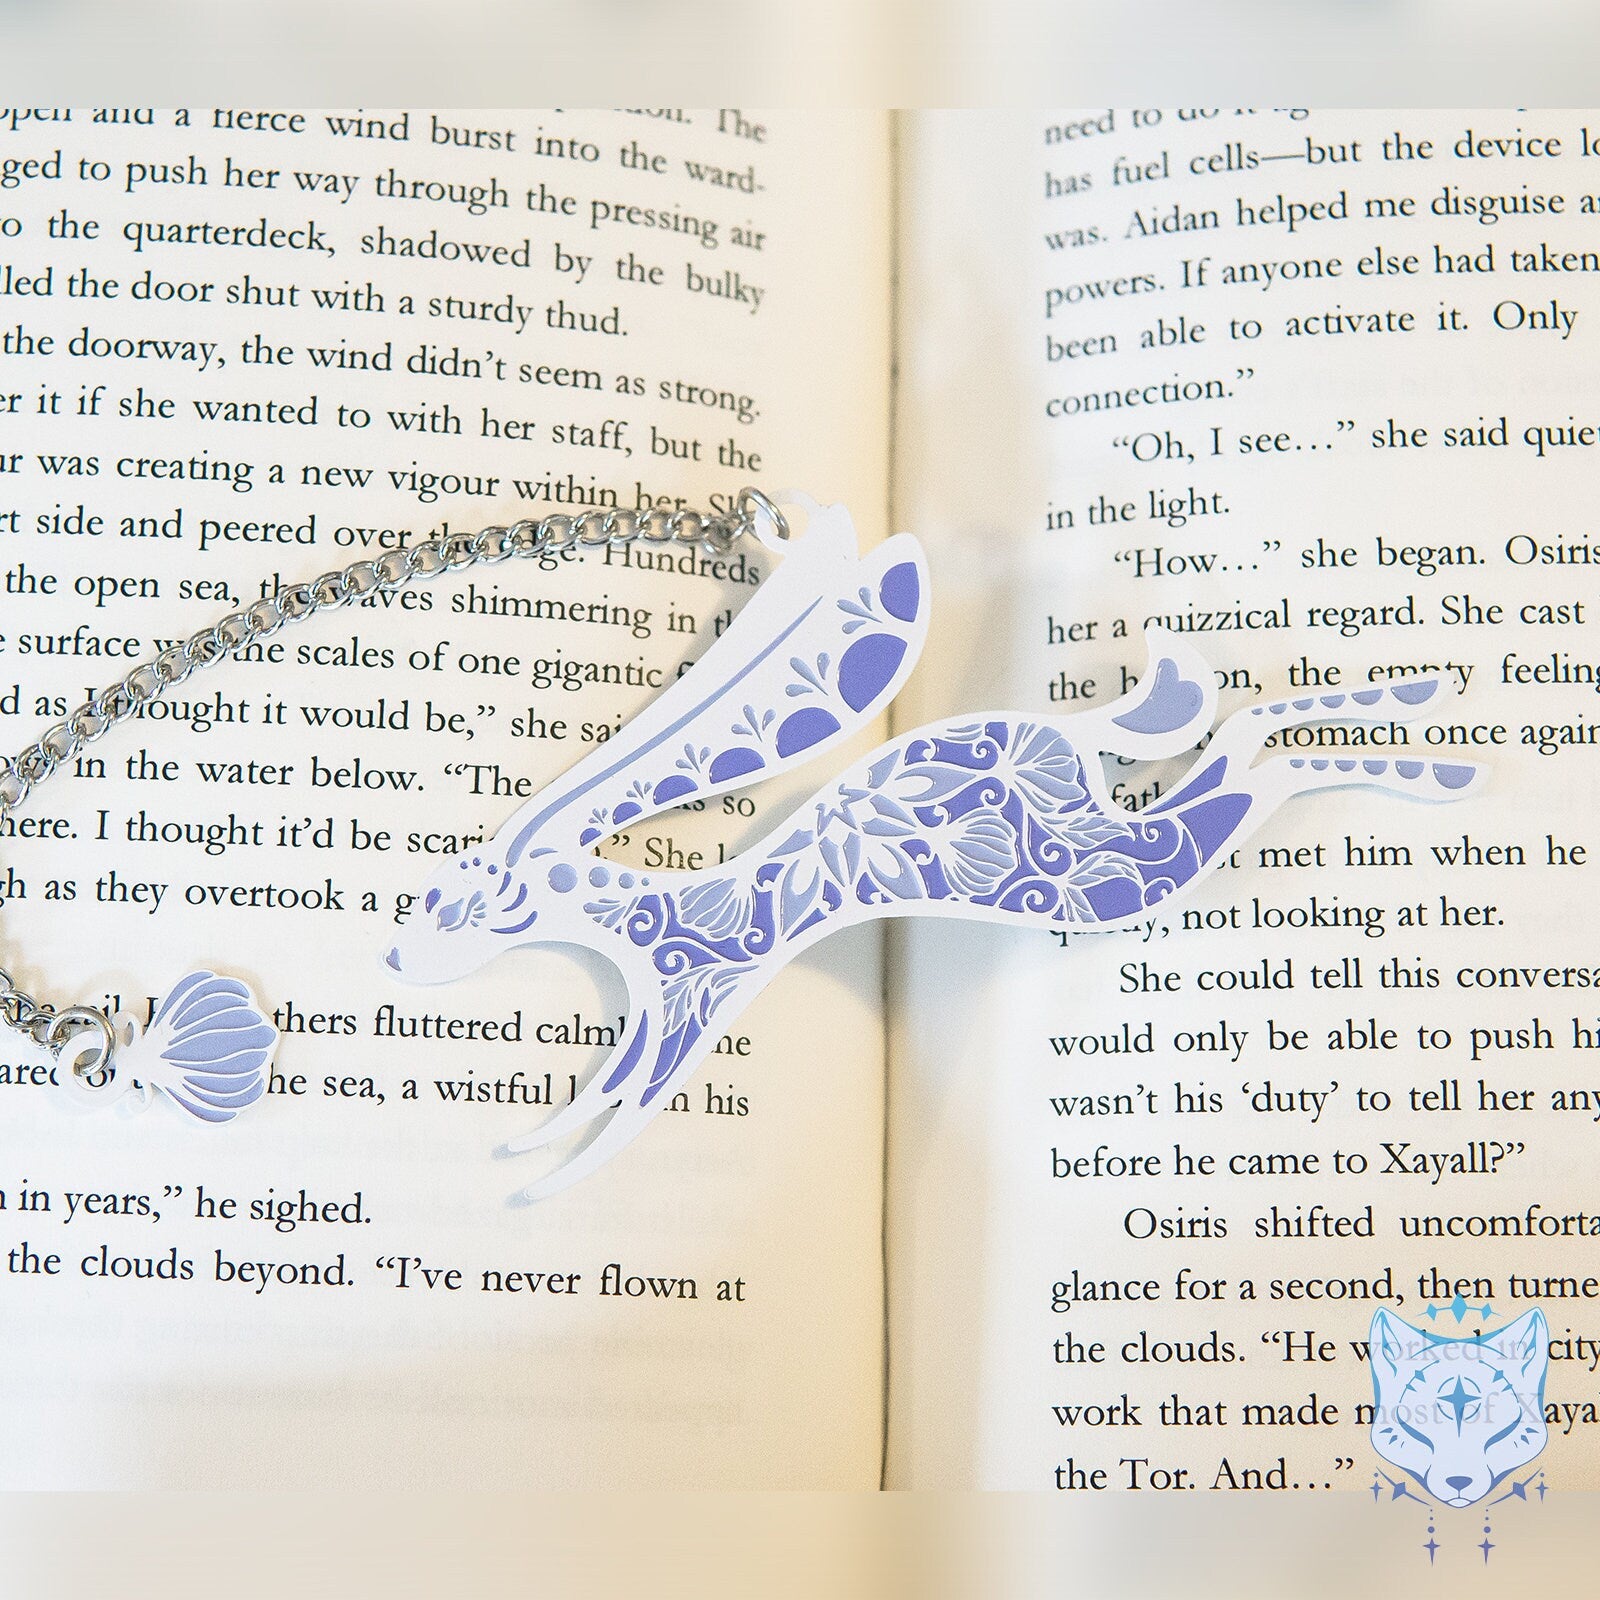 Floral Lavendar Rabbit Metal Bookmark - 3.75 inch Metal Bookmark, Book Accessories, Book Lovers Gift